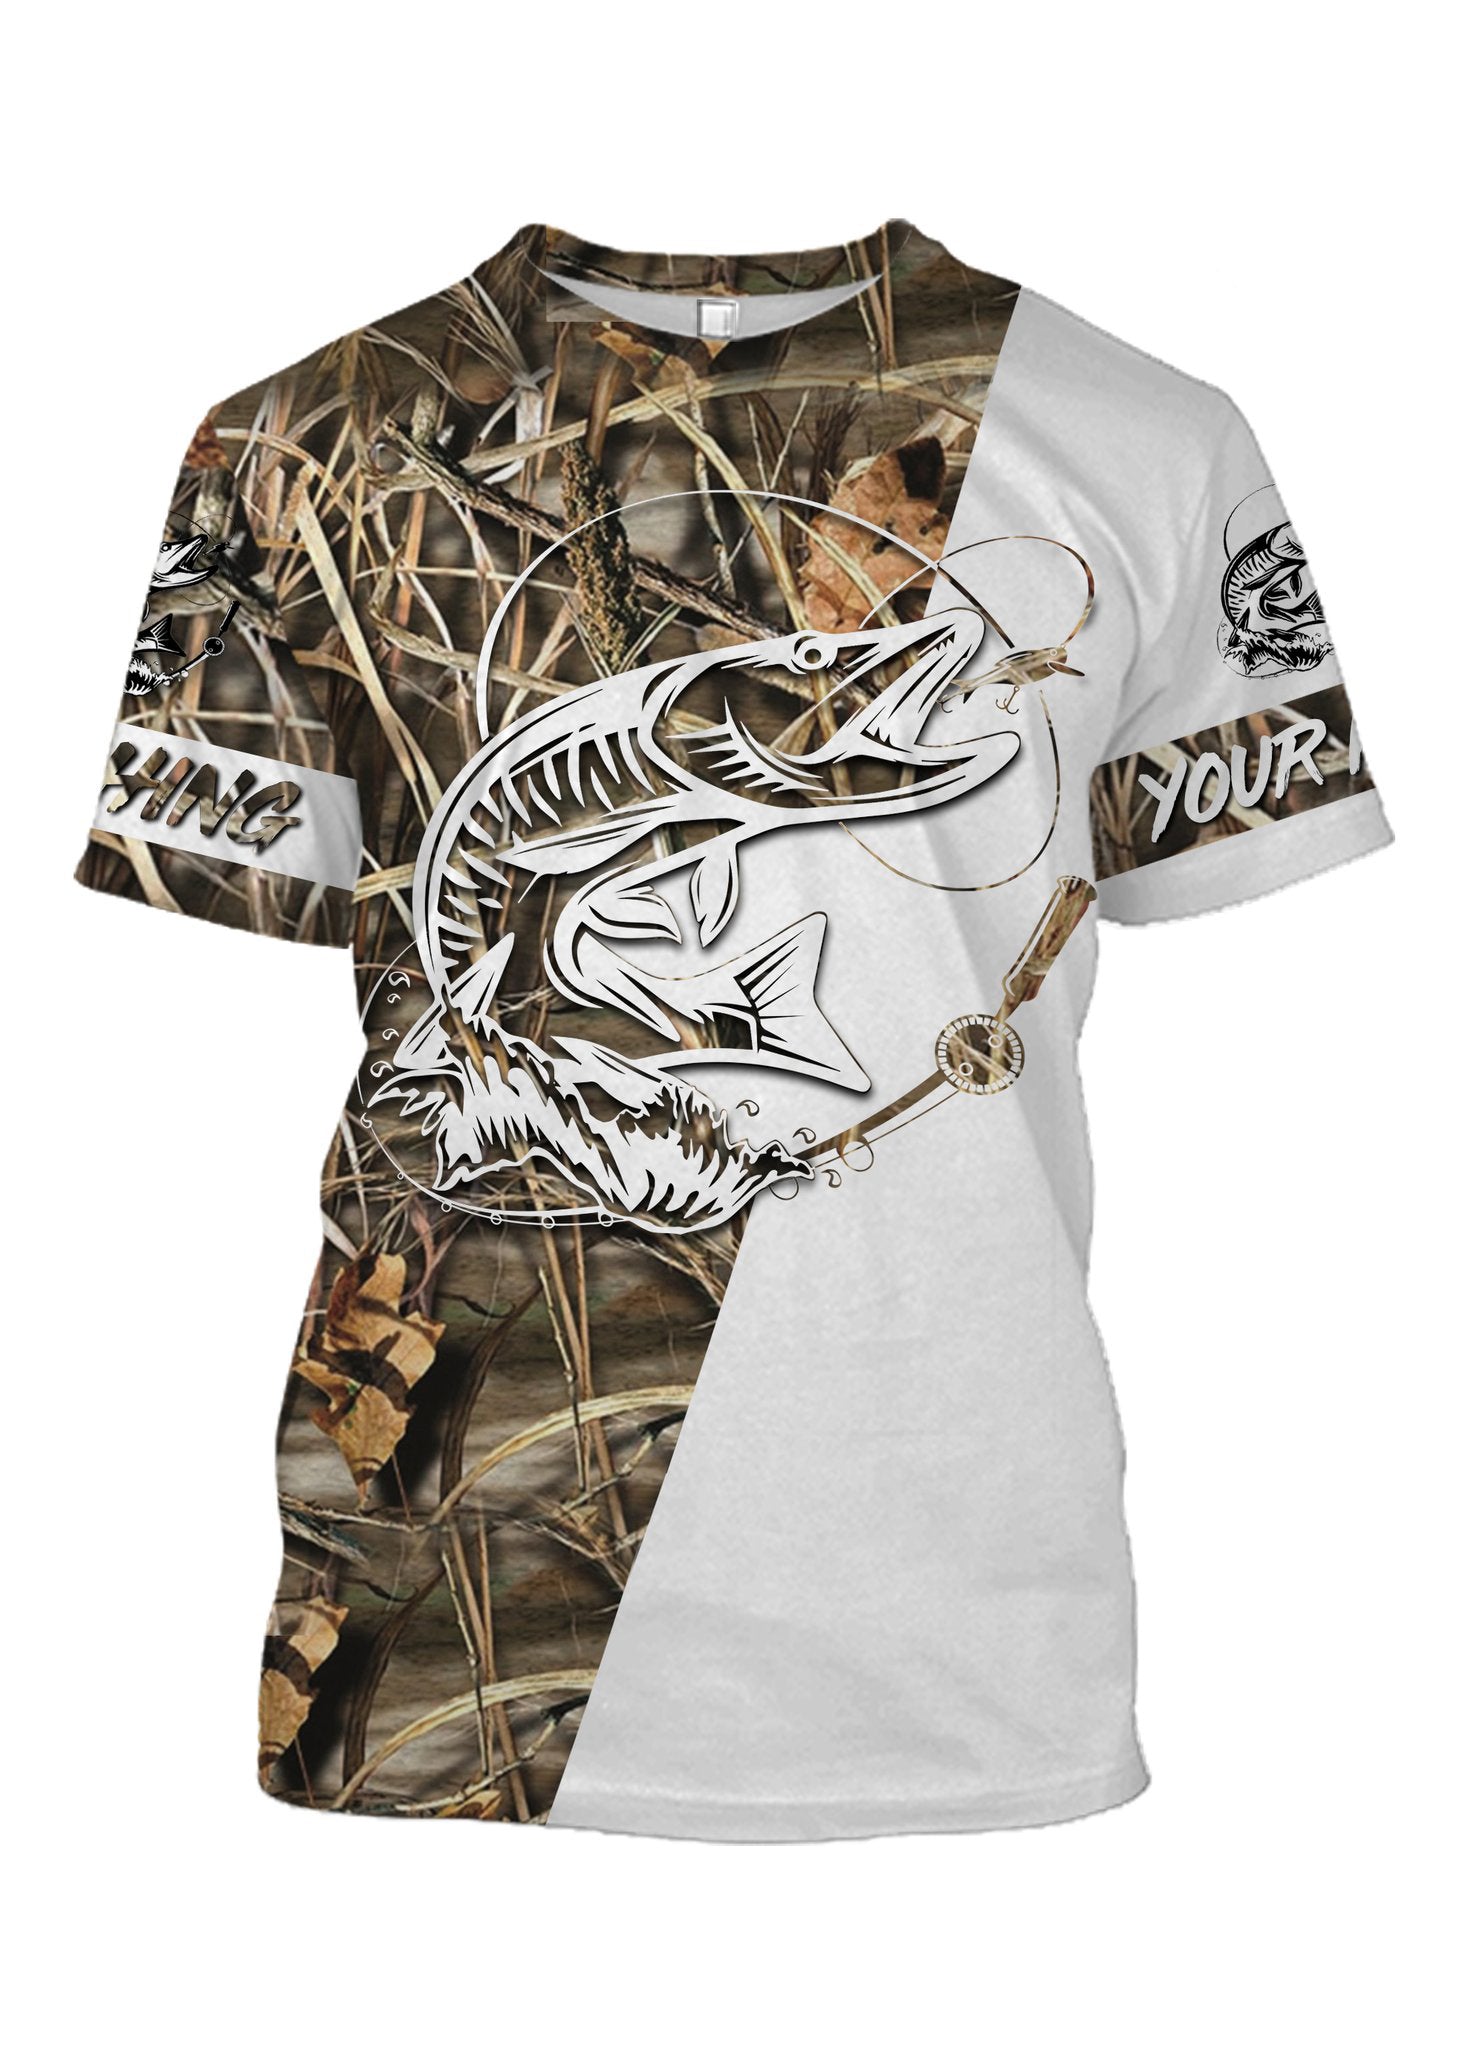 Personalized Musky Fishing Tattoo Full Printing Shirt Long Sleeve Ho Chipteeamz